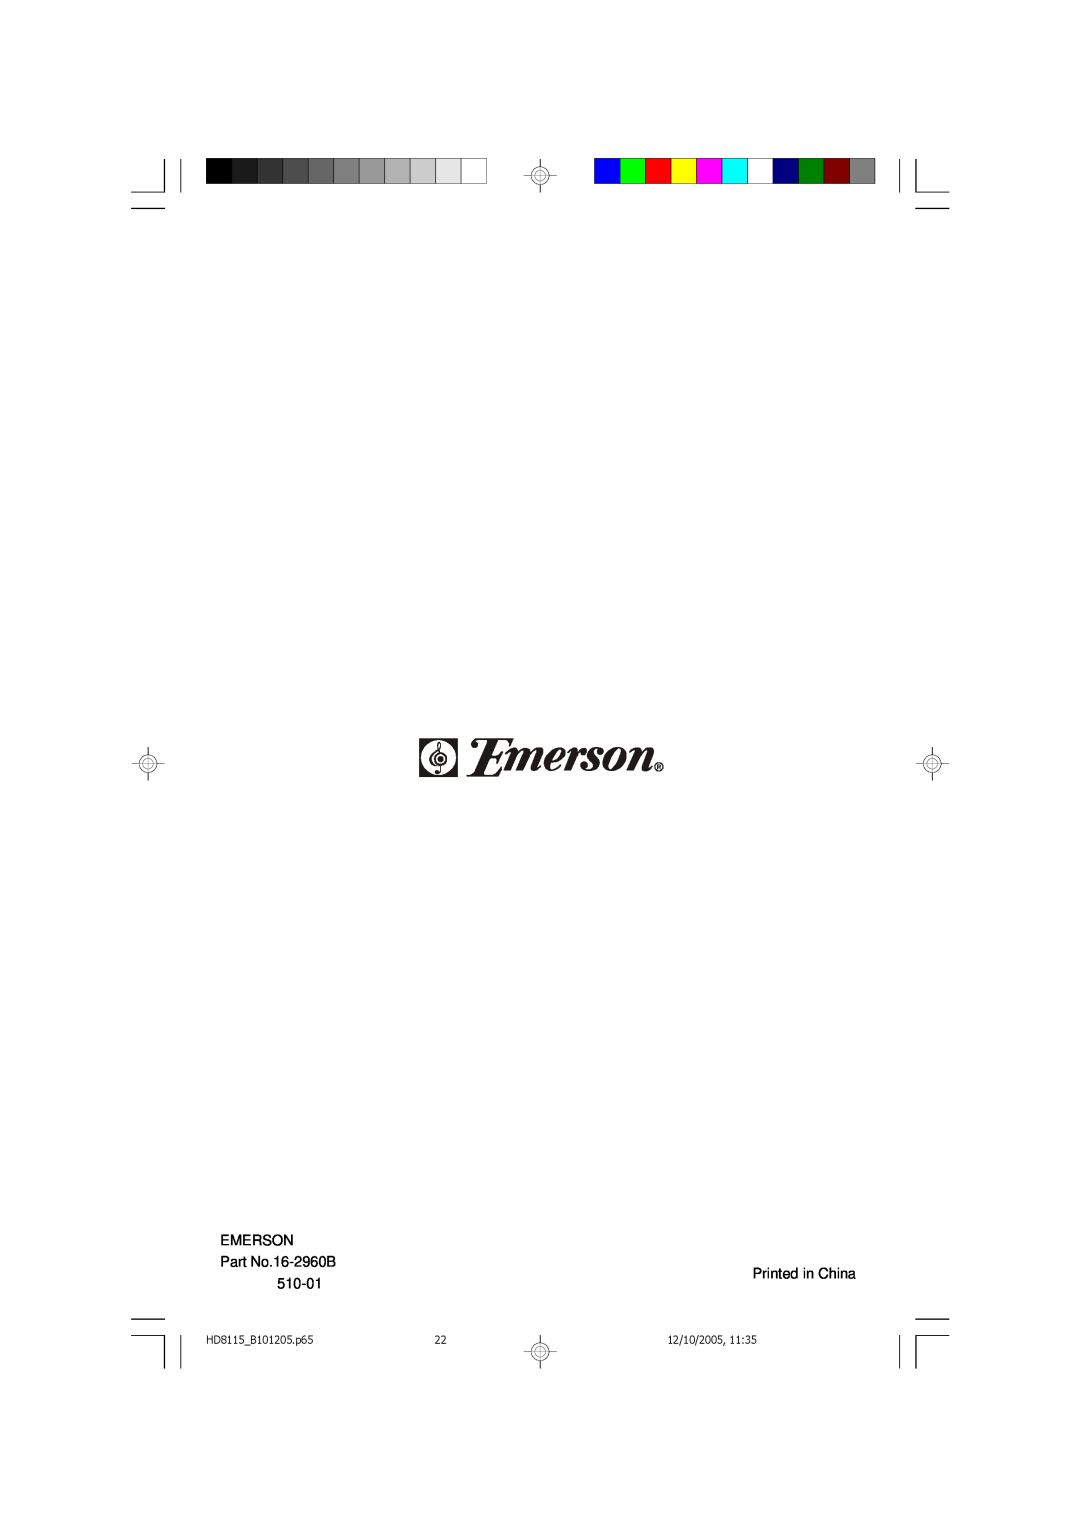 Emerson owner manual EMERSON Part No.16-2960B, 510-01, Printed in China, HD8115_B101205.p65, 12/10/2005, 11:35 